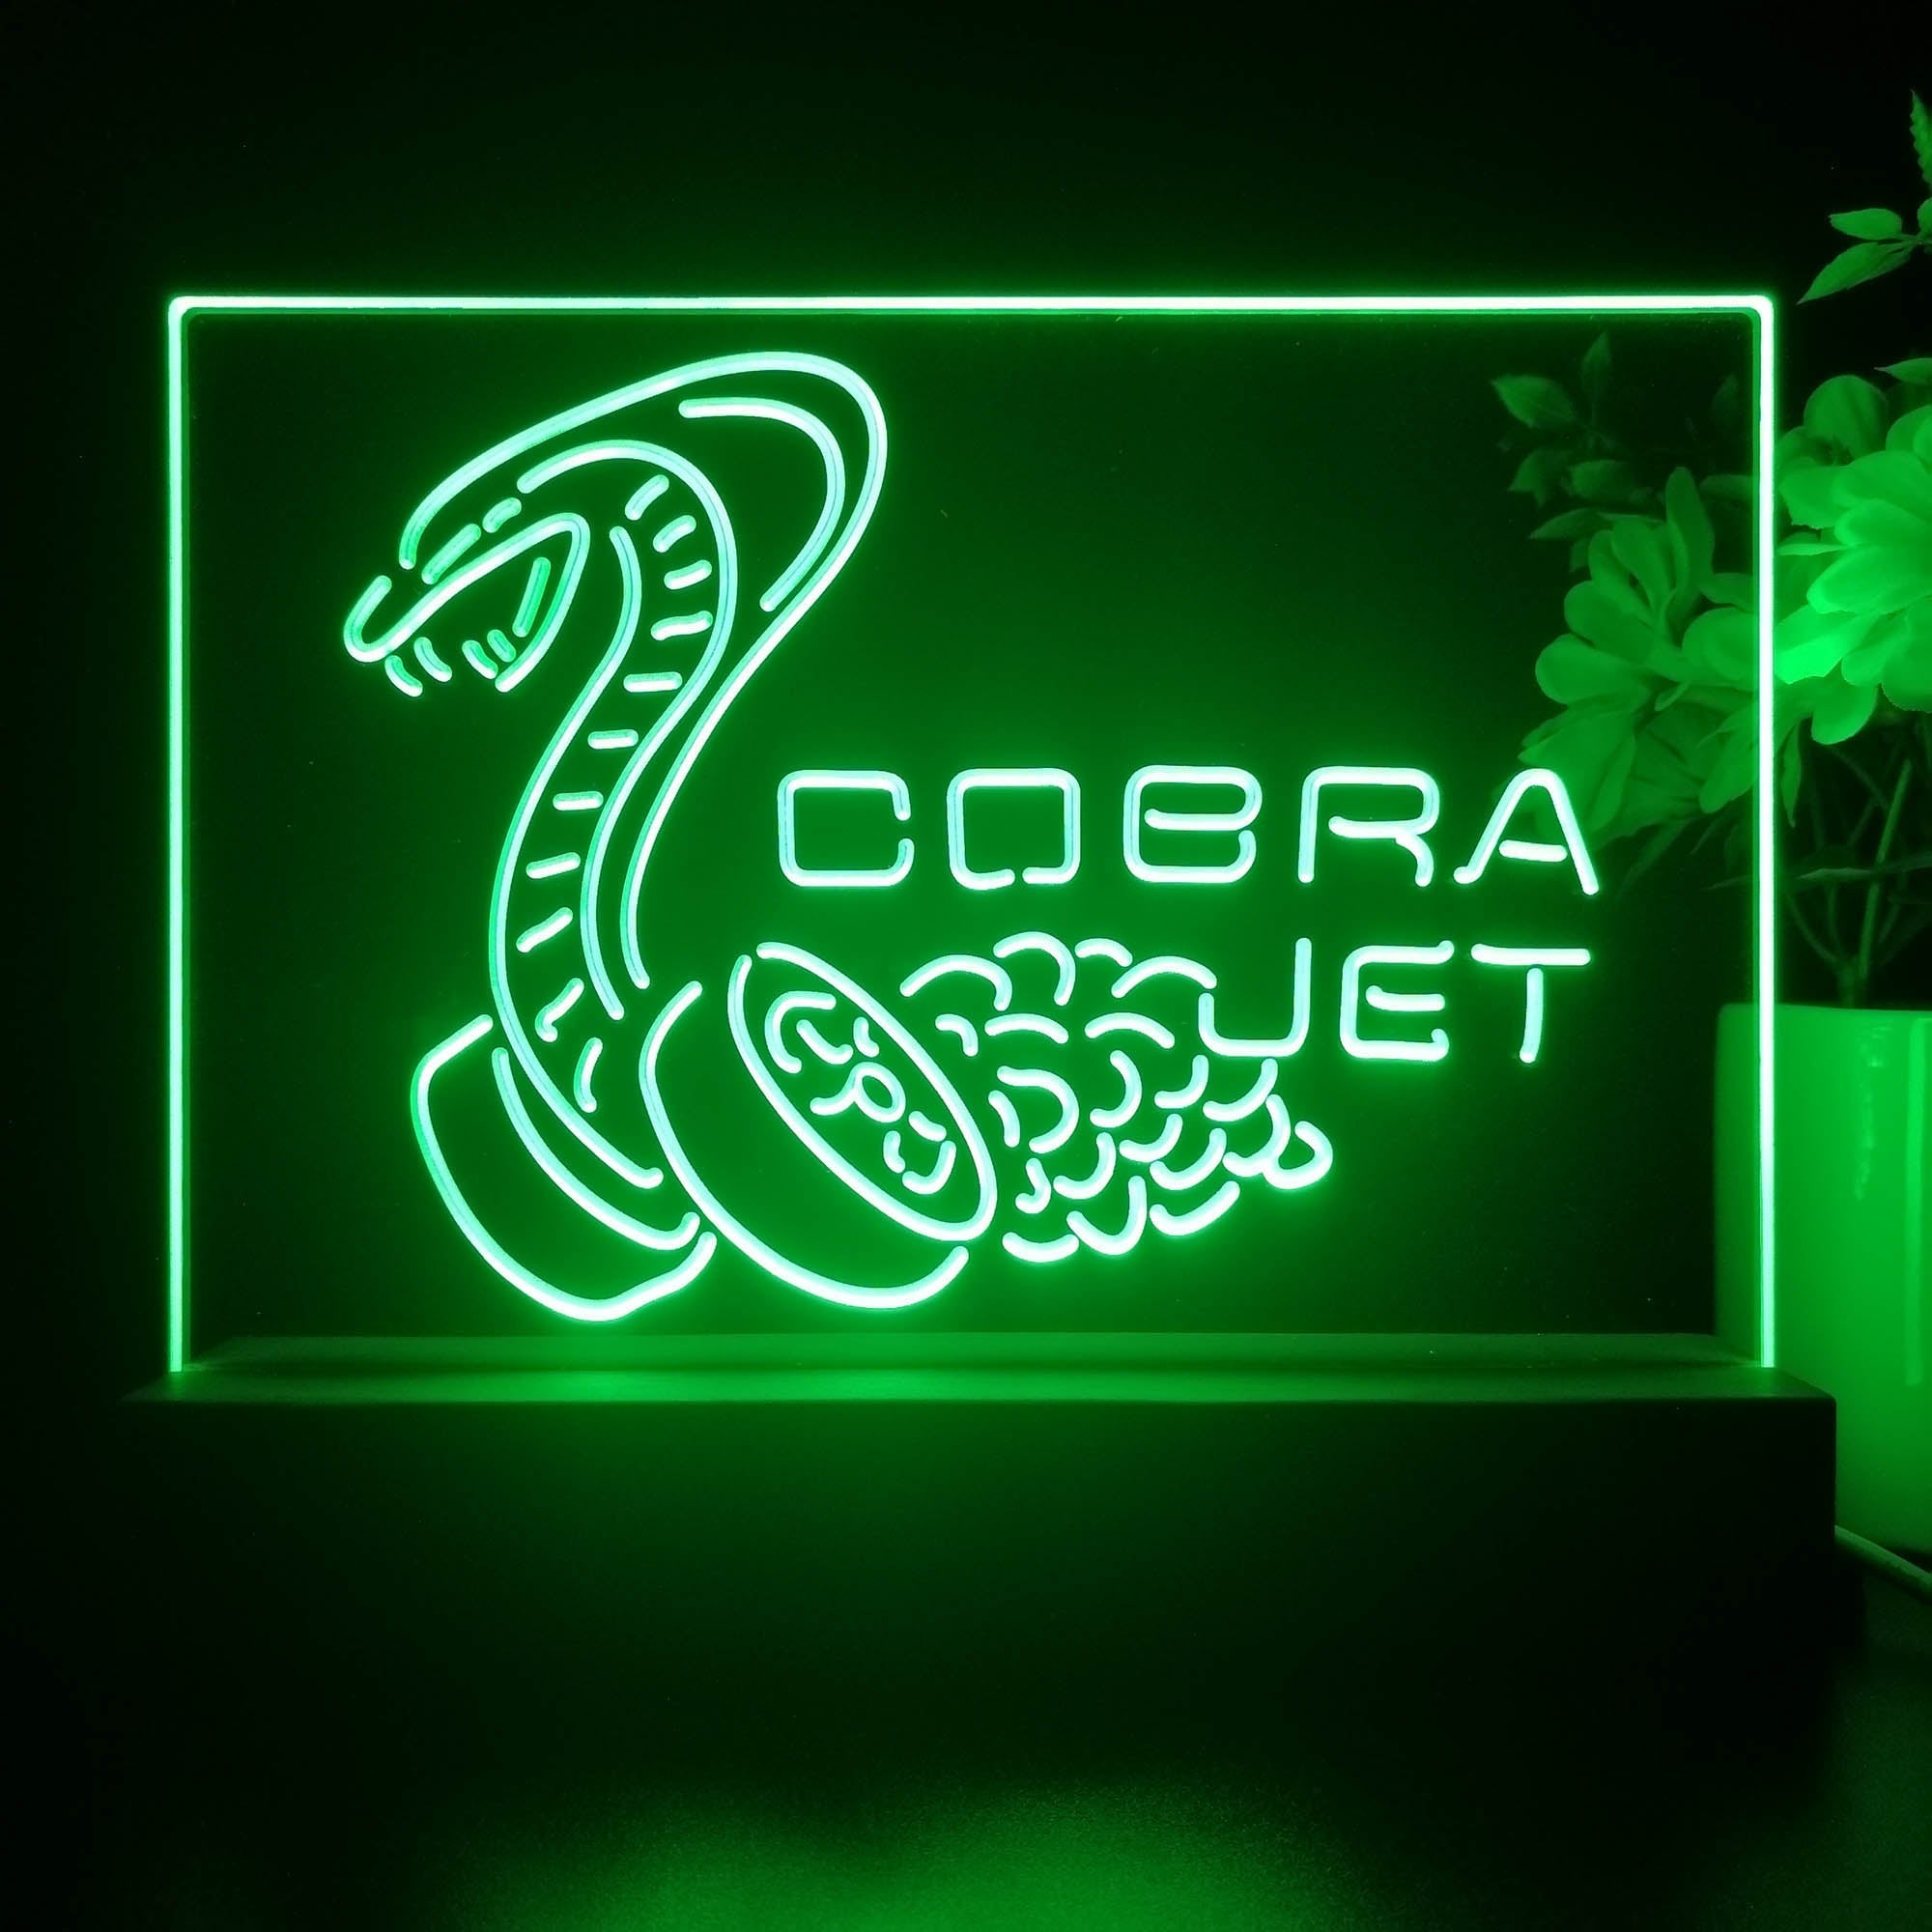 Cobra Jet Car 3D Illusion Night Light Desk Lamp